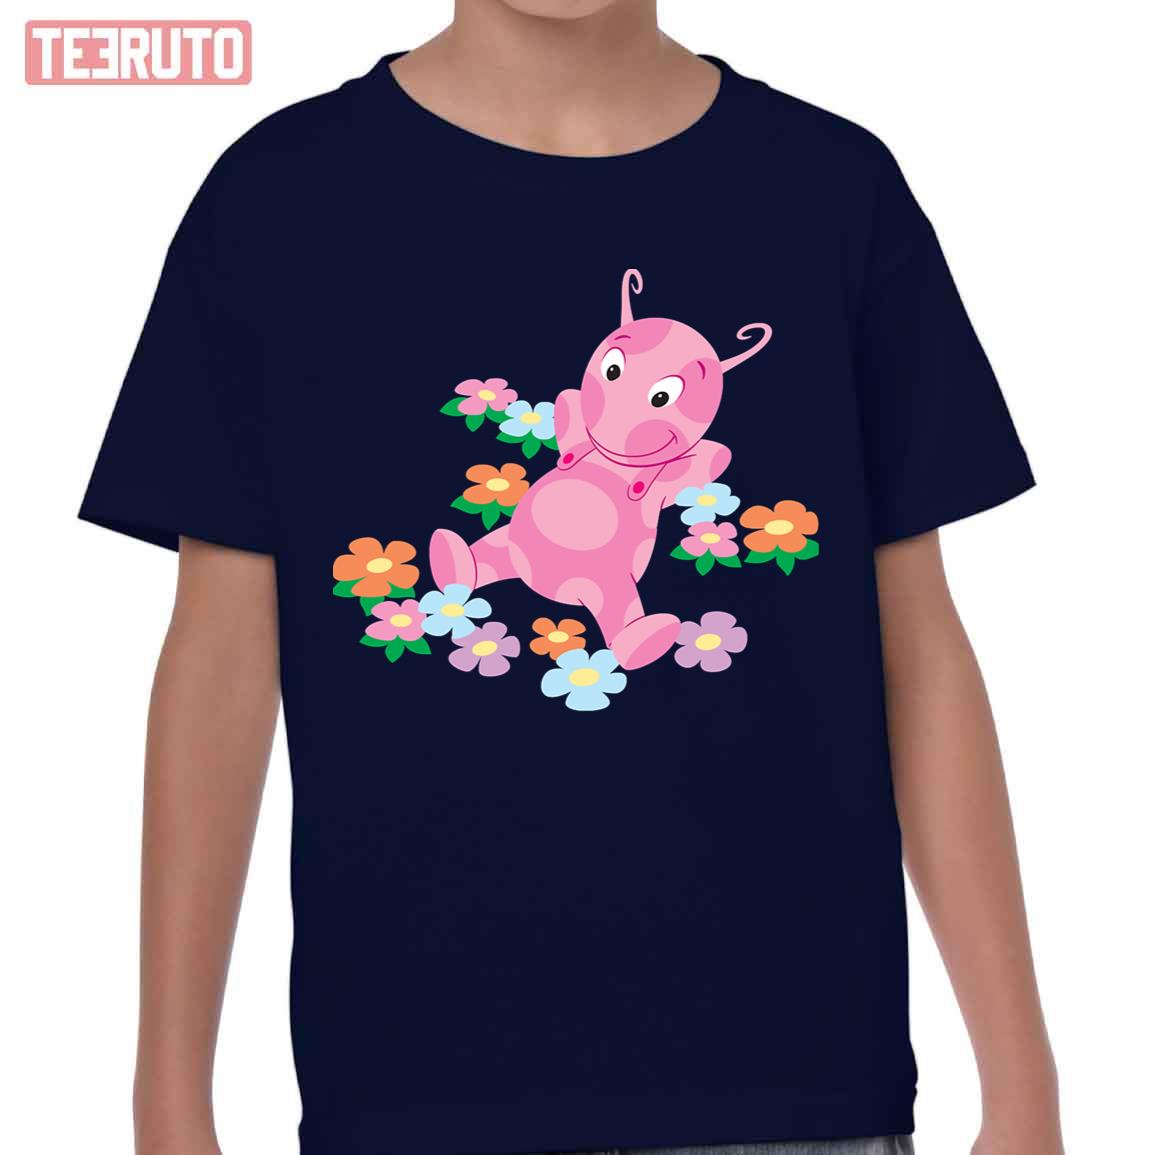 Tasha And The Flower Backyardigans Unisex T-Shirt